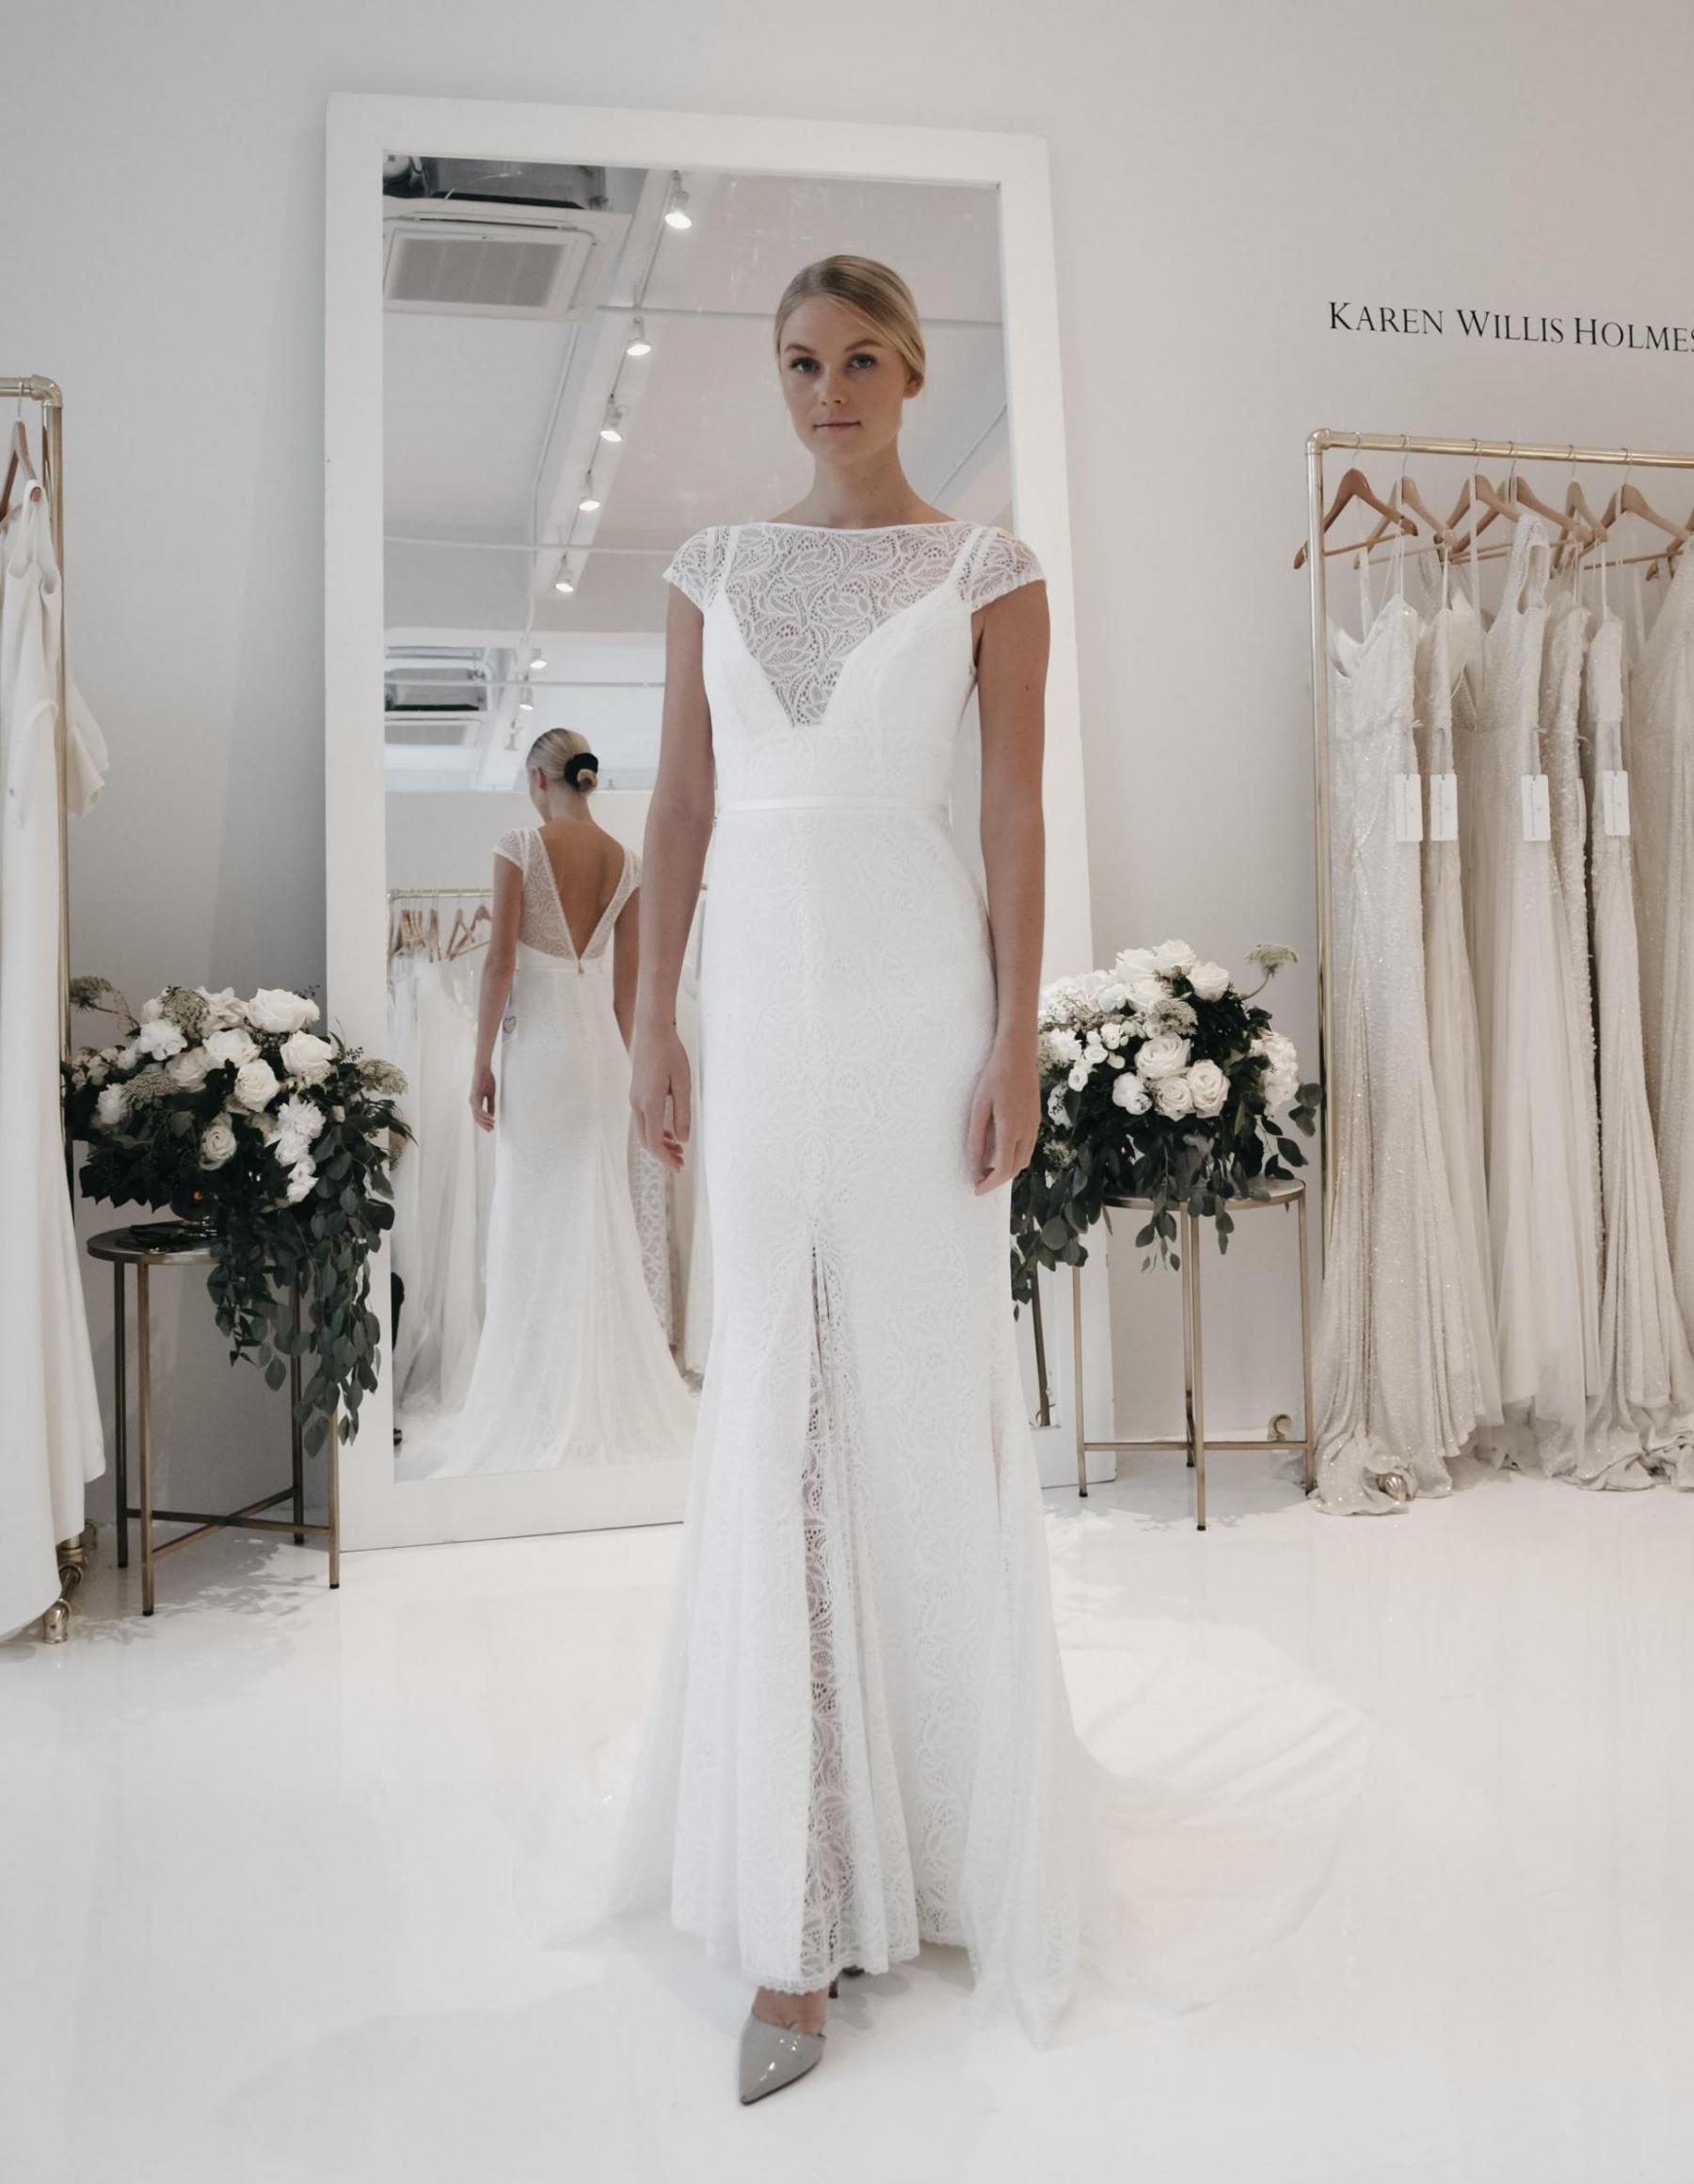 Jemma | Cap Sleeve Illusion Lace Wedding Dress | Karen Willis Holmes